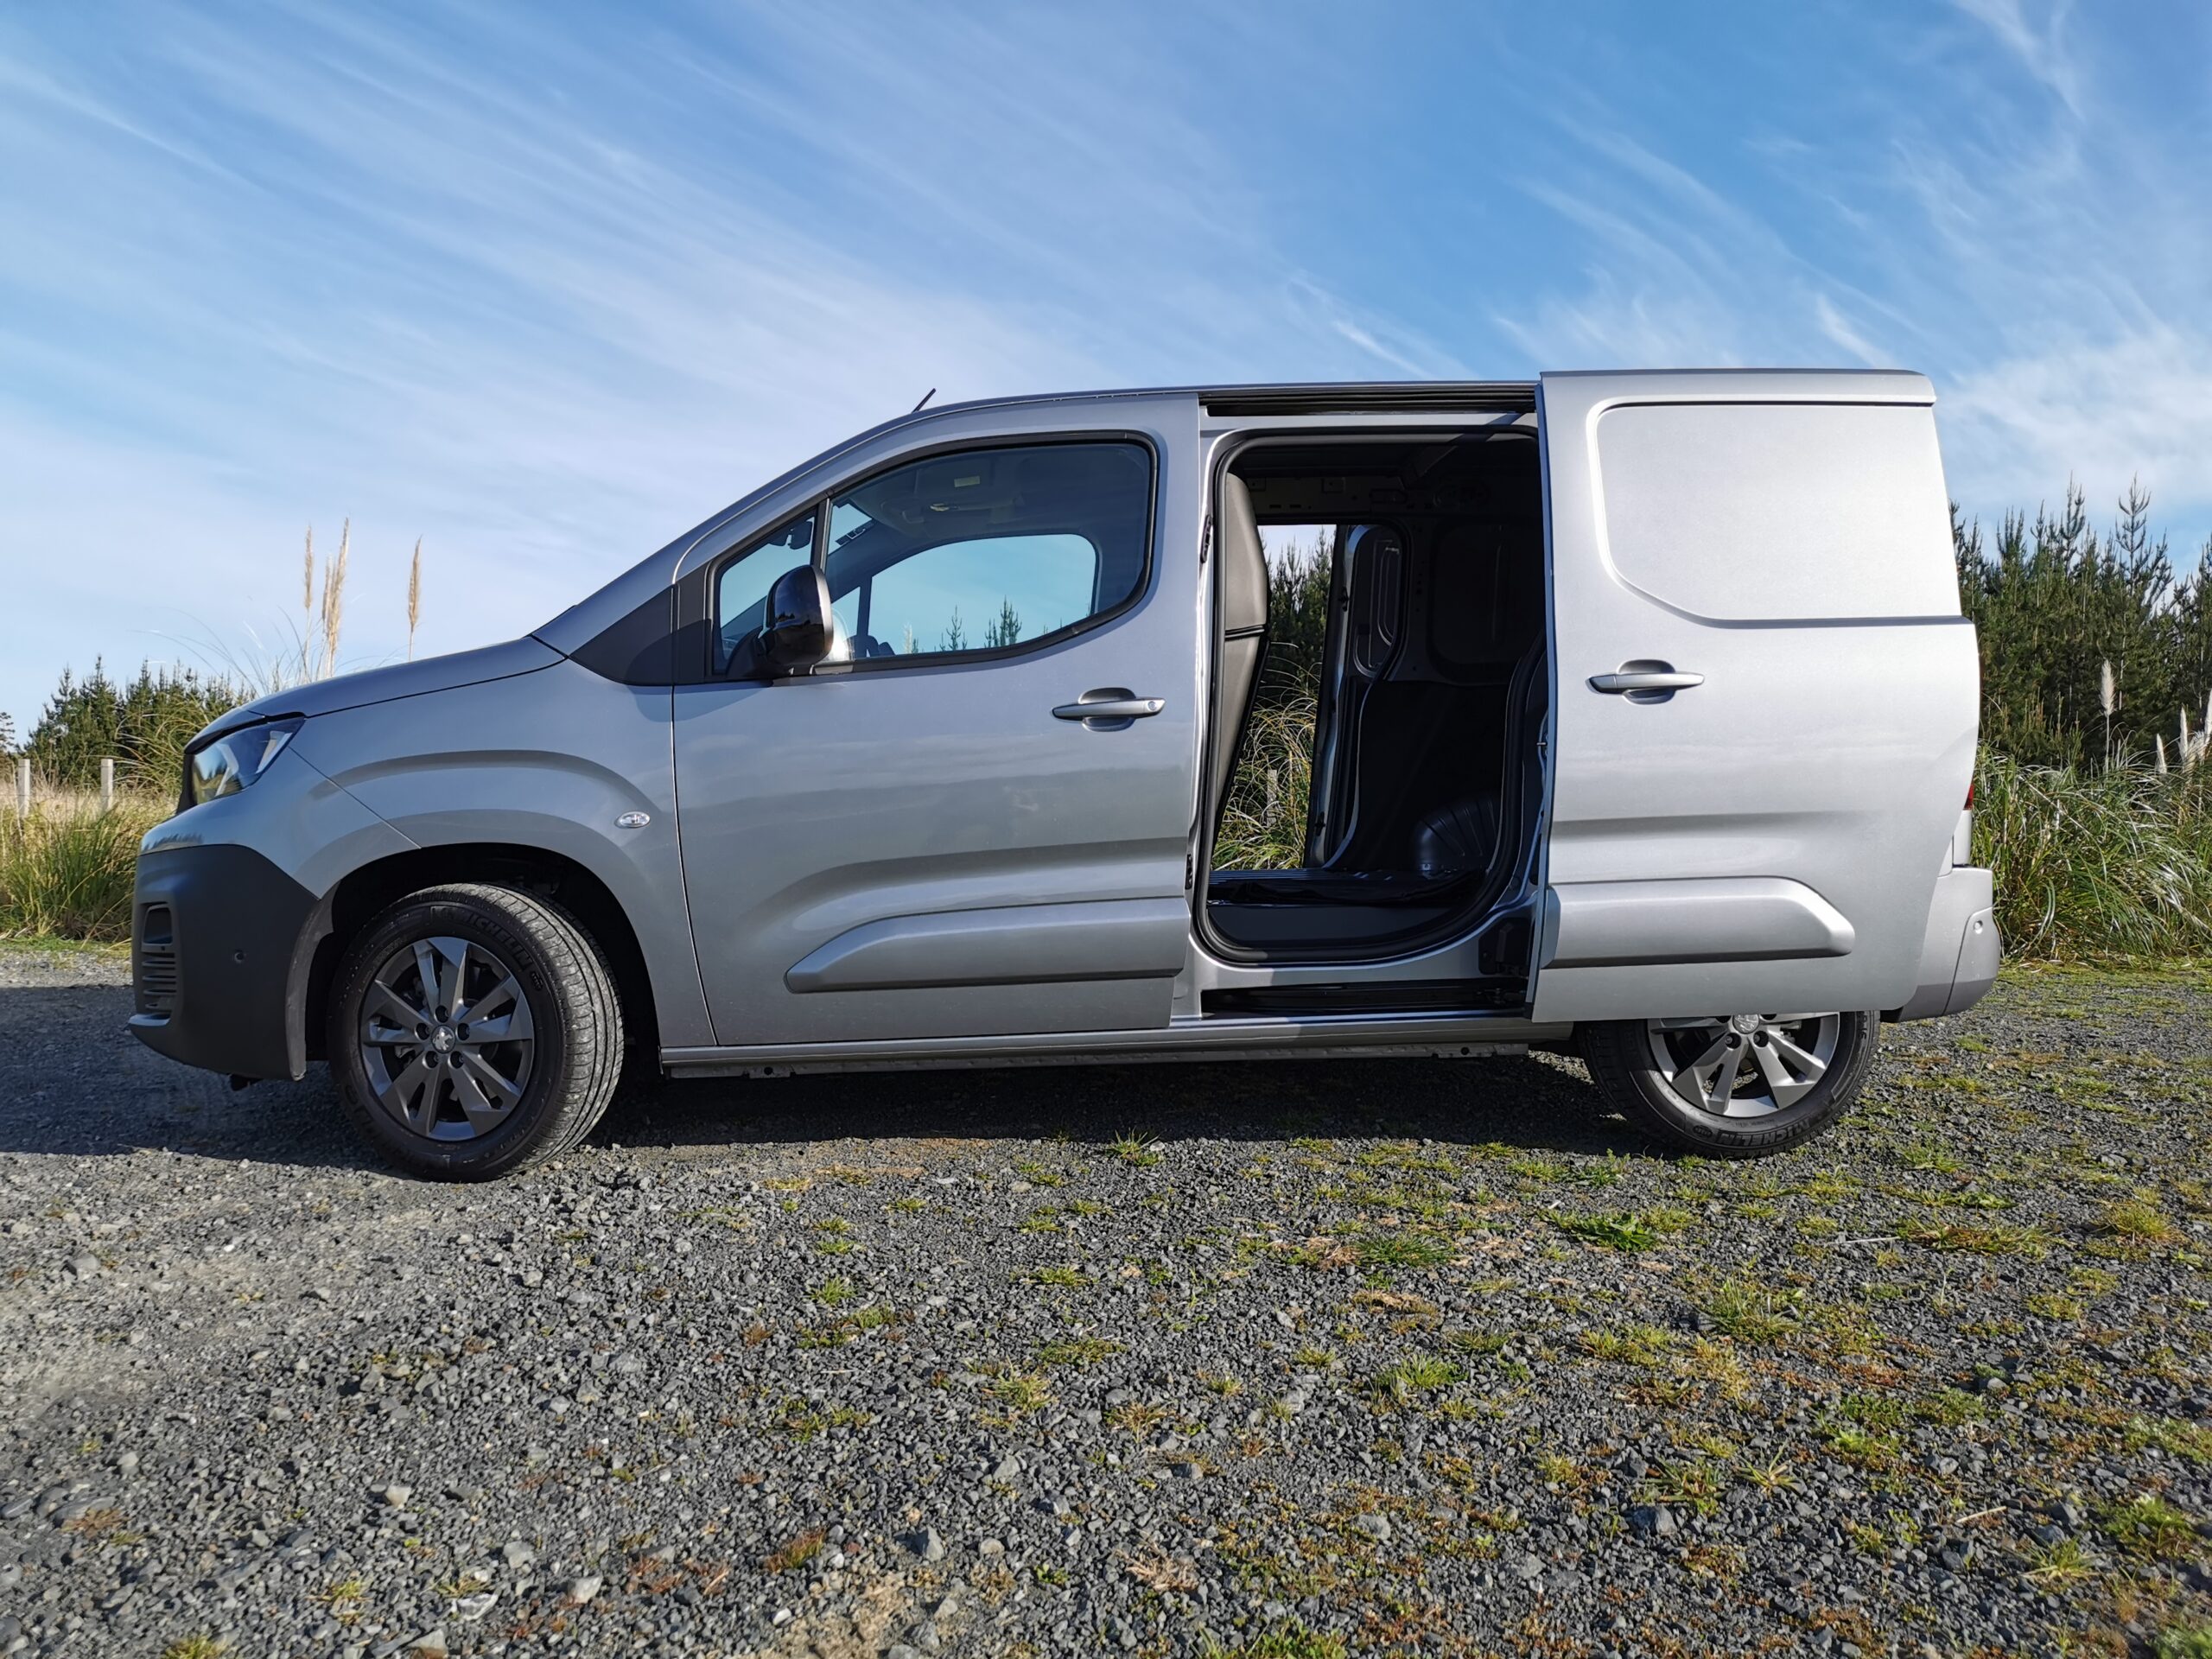 new Peugeot Partner review NZ